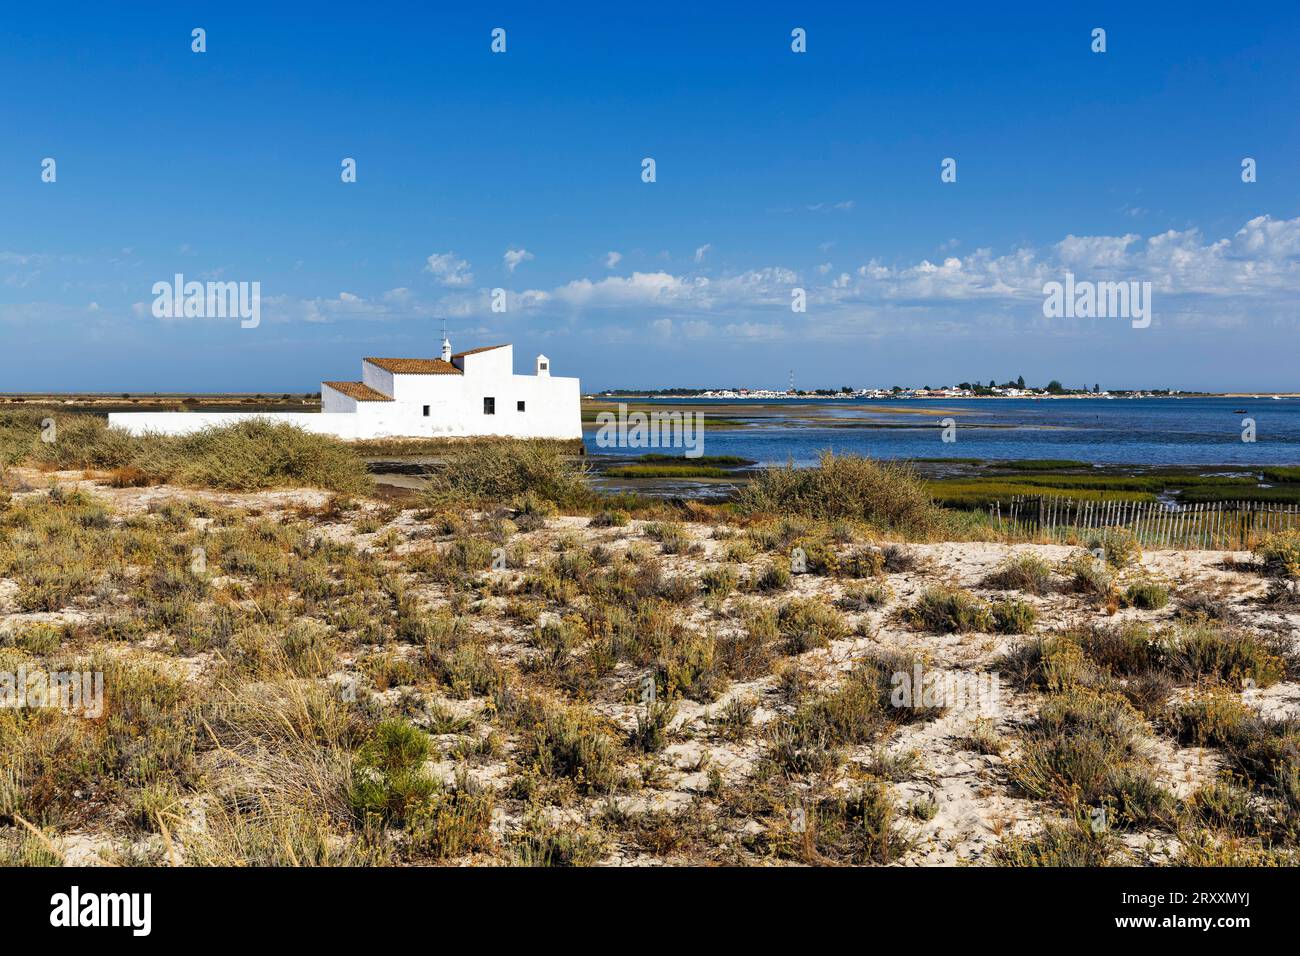 Tidal mill, dune landscape, salt marshes, Quinta de marim, Ria Formosa nature park Park, Olhao, Olhao, Algarve, Portugal Stock Photo